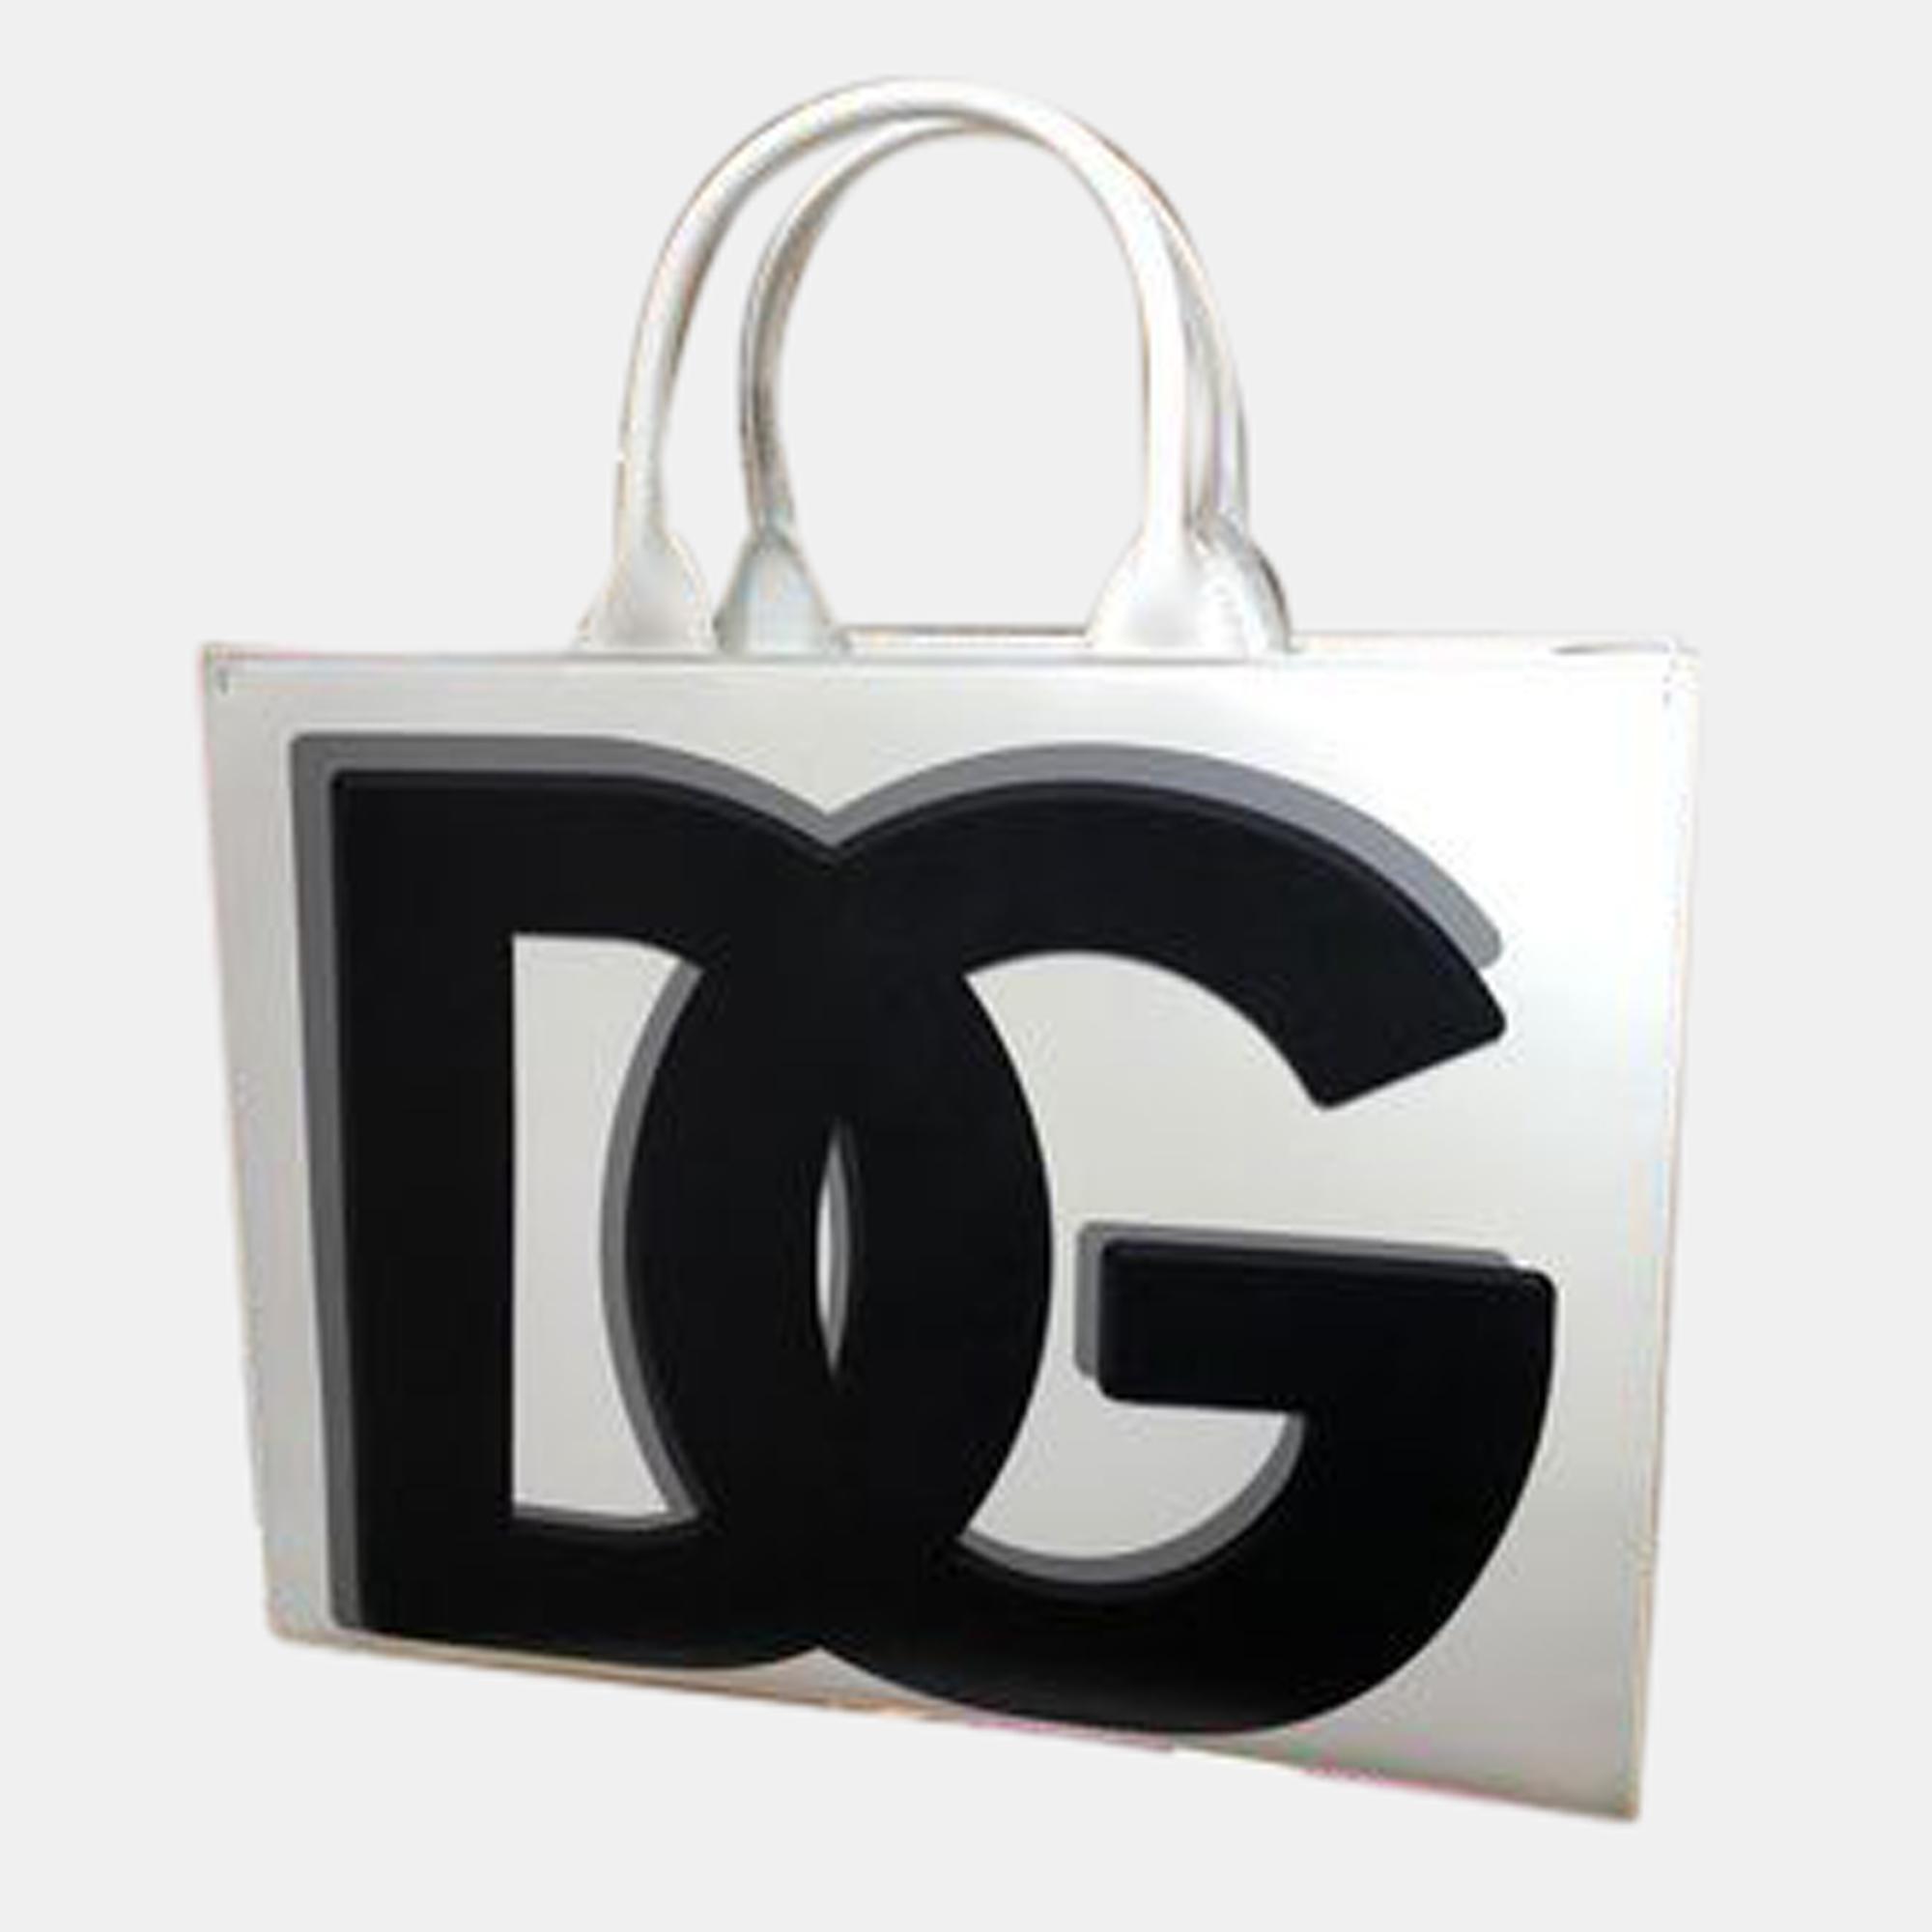 Dolce & Gabbana Black & White - Leather - Tote Bag